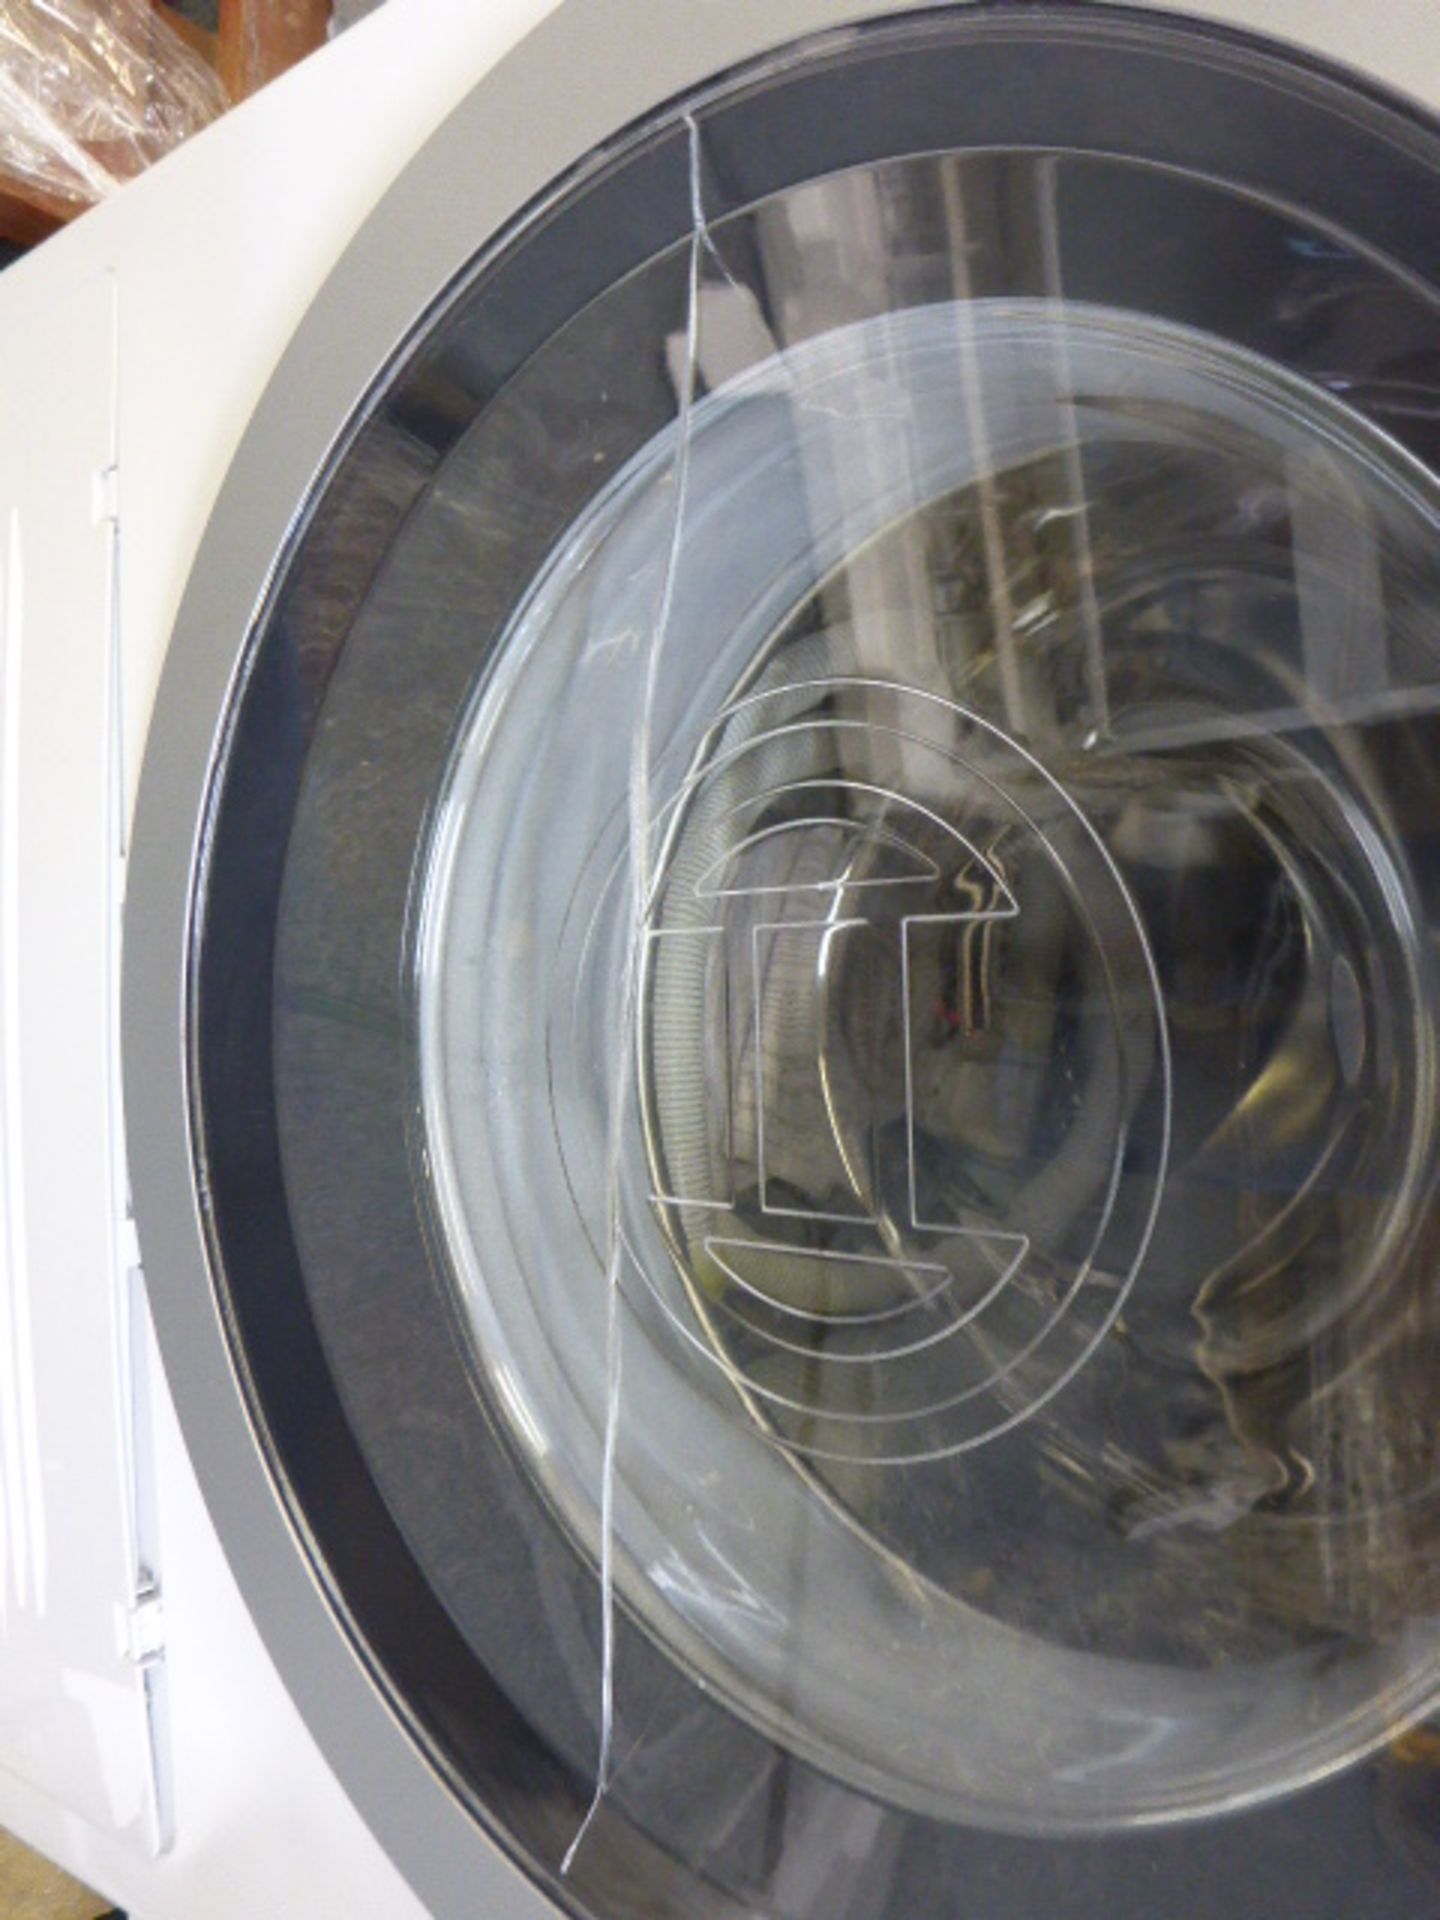 WVH28424GBB Bosch Washer-dryer (cracked door) - Image 2 of 2